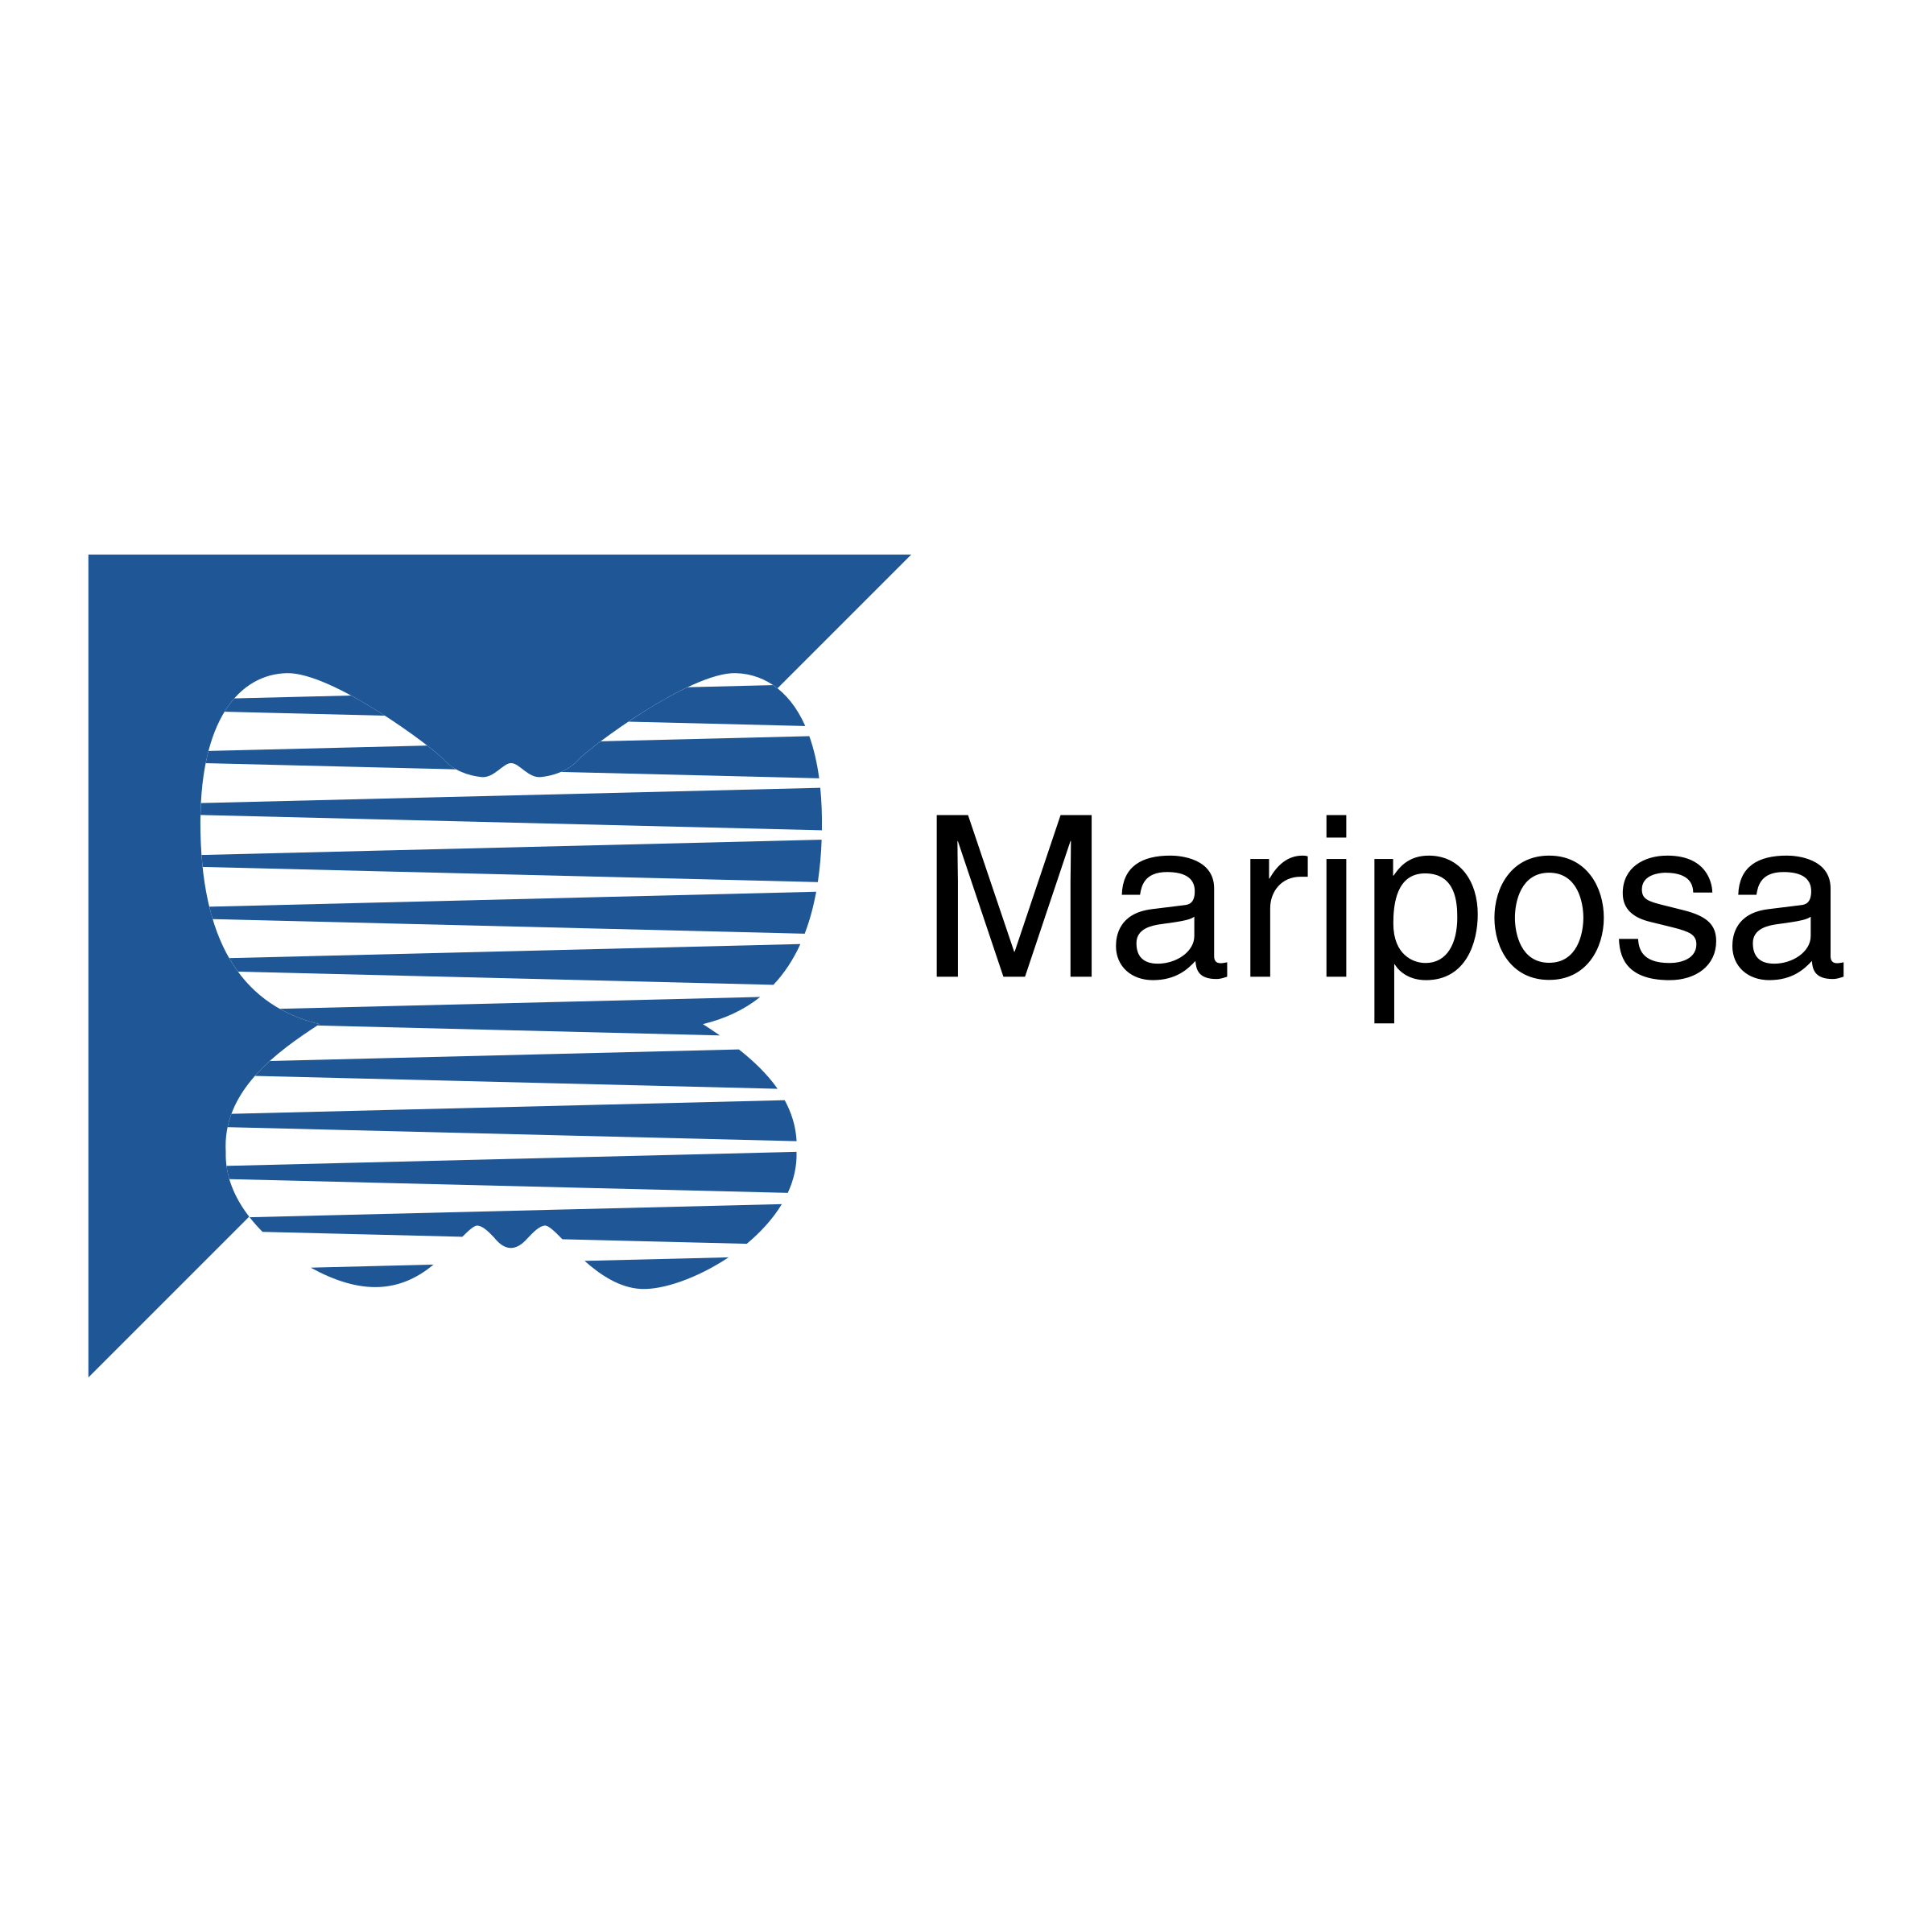 Mariposa Logo - Mariposa Logo PNG Transparent & SVG Vector